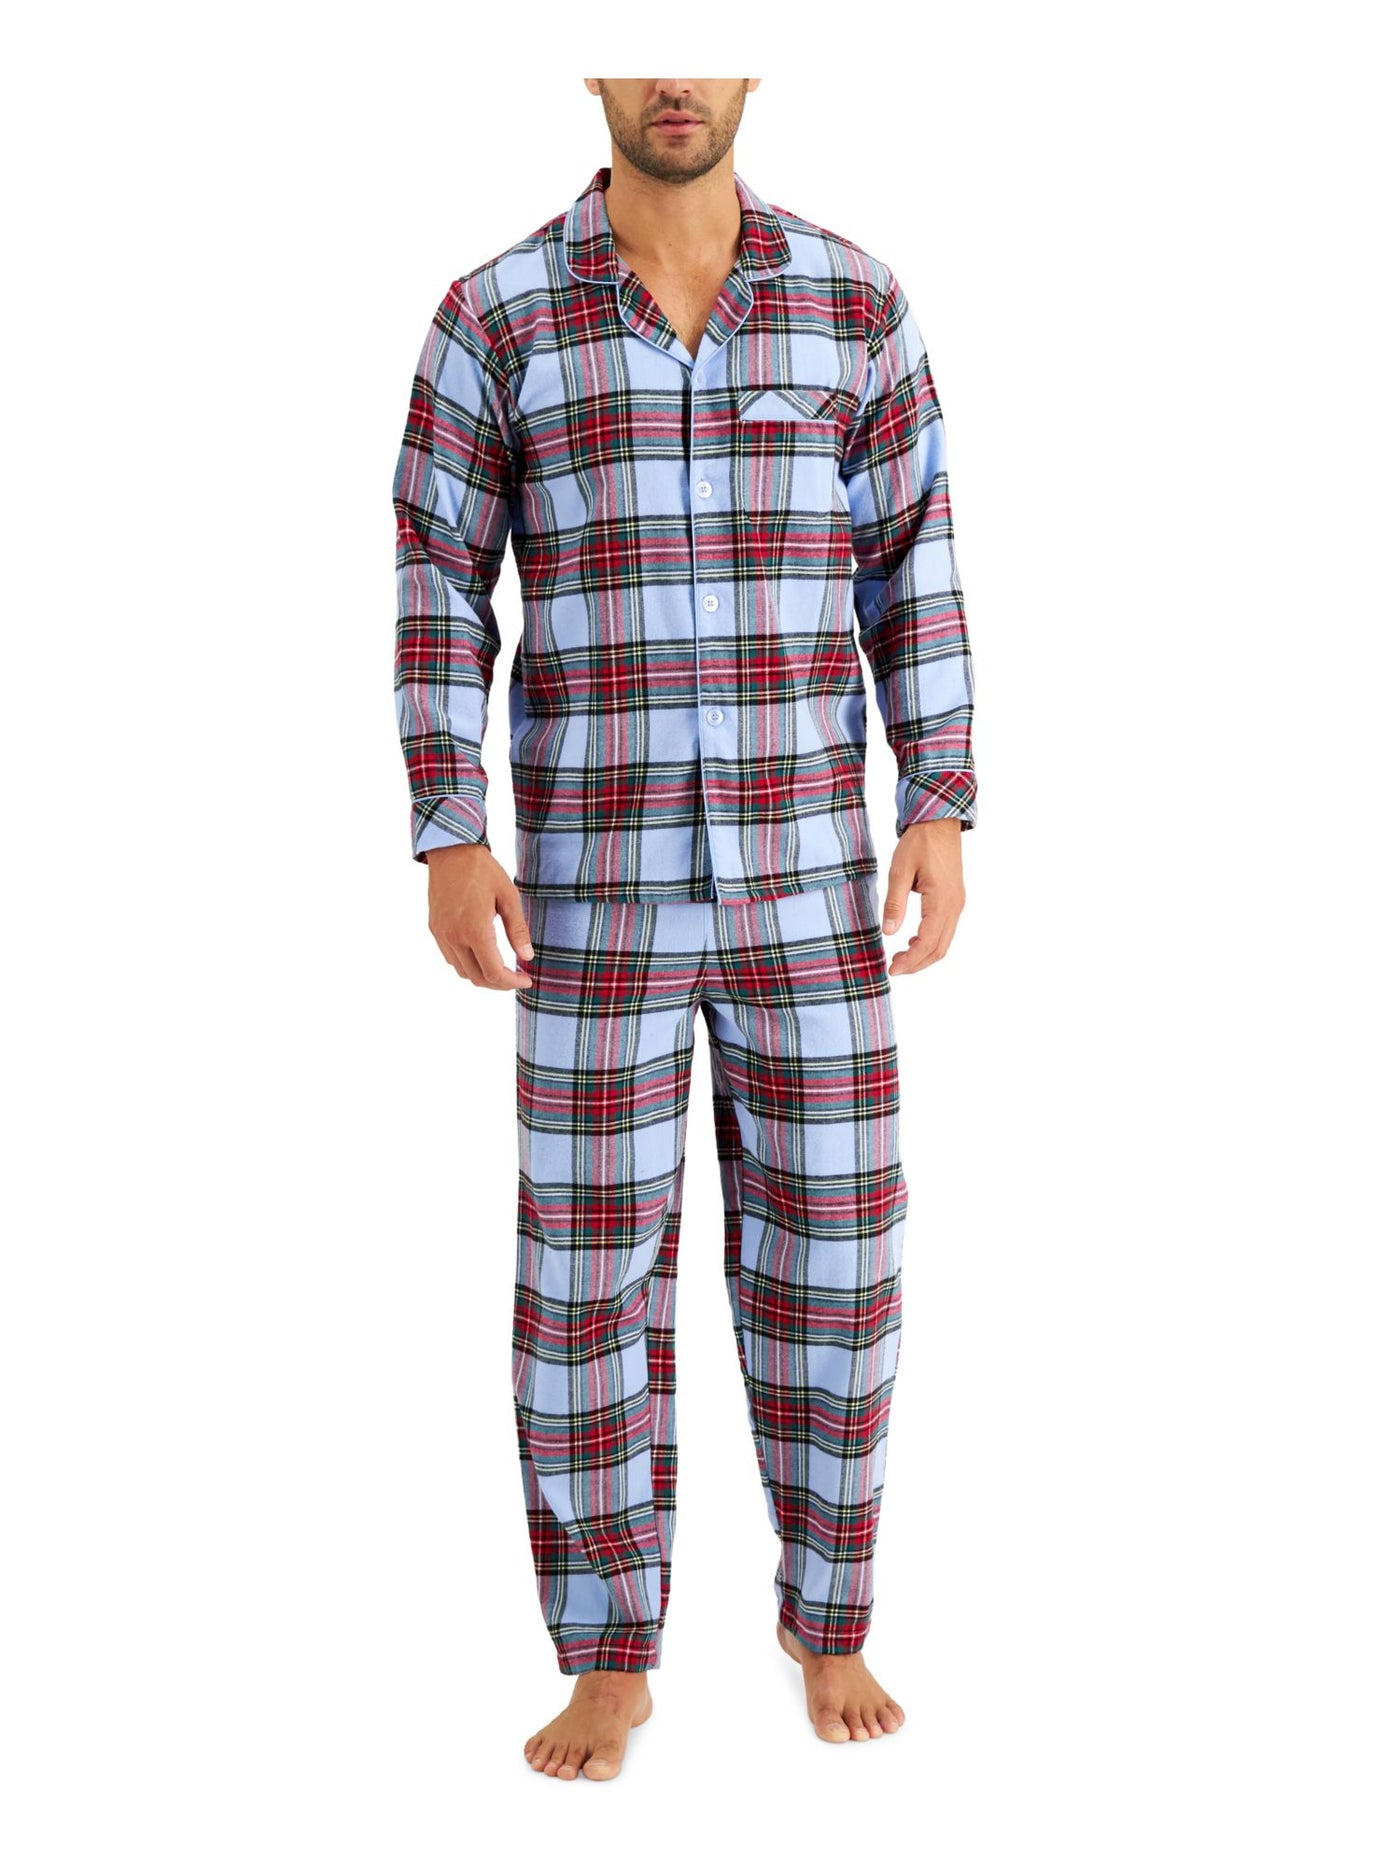 FAMILY PJs Mens Light Blue Plaid Long Sleeve Button Up Top Straight leg Pants Knit Pajamas S